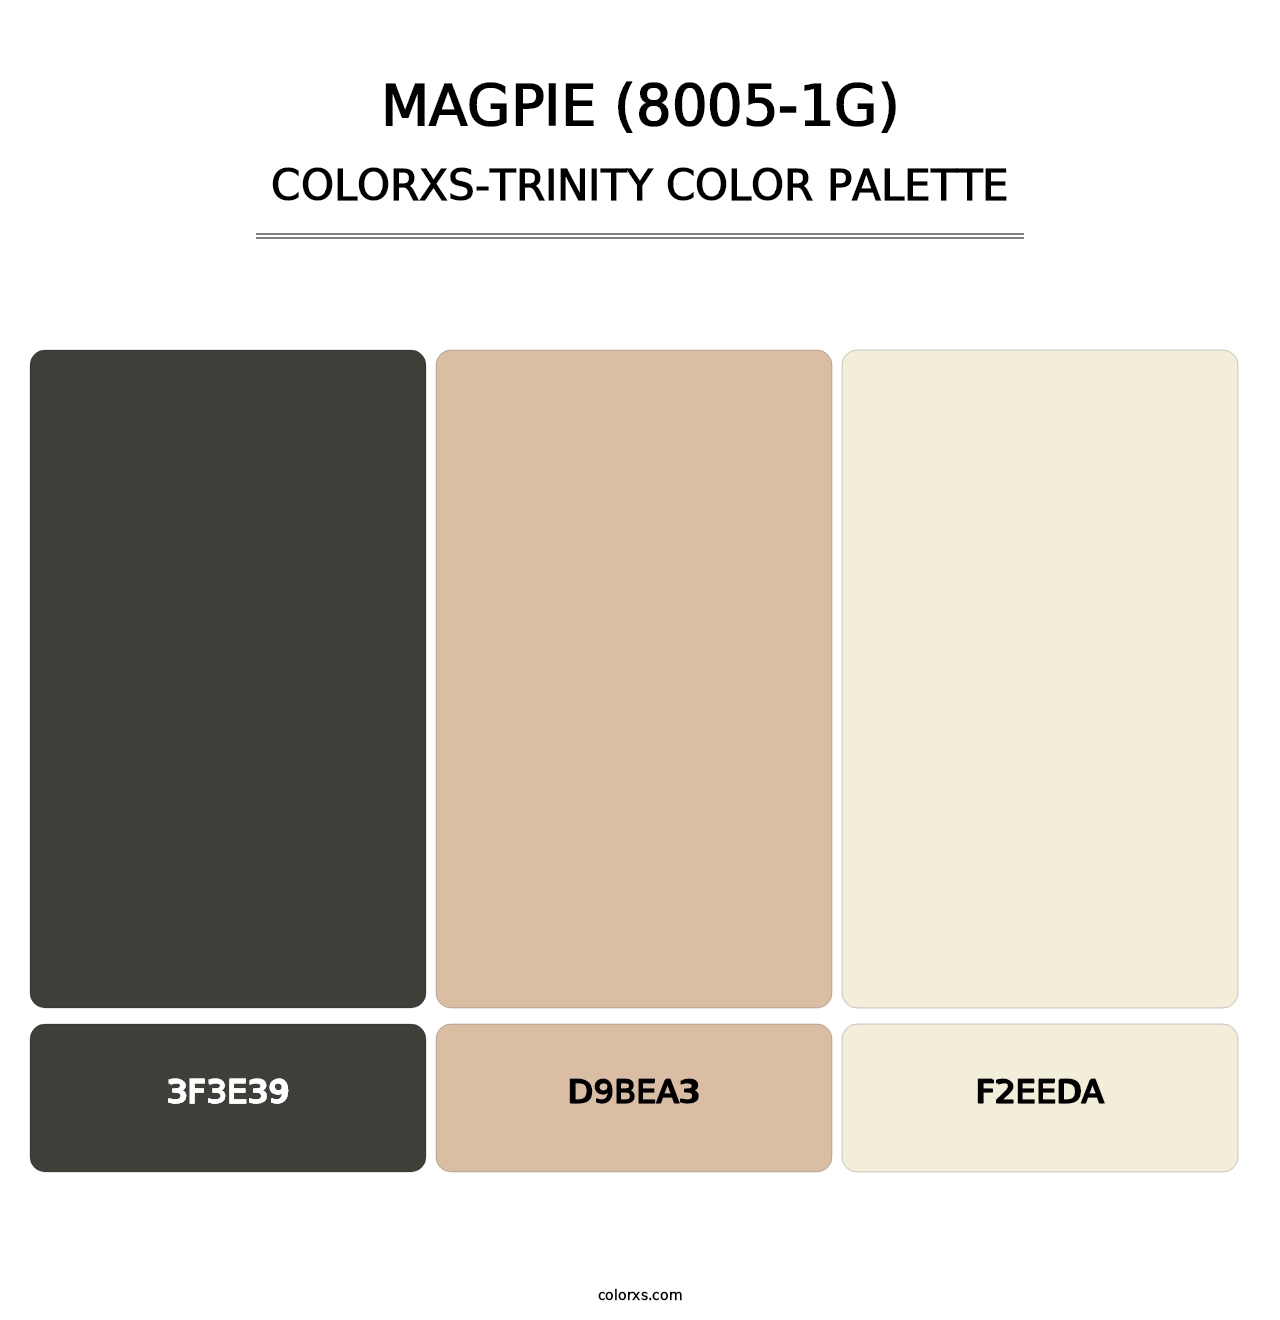 Magpie (8005-1G) - Colorxs Trinity Palette